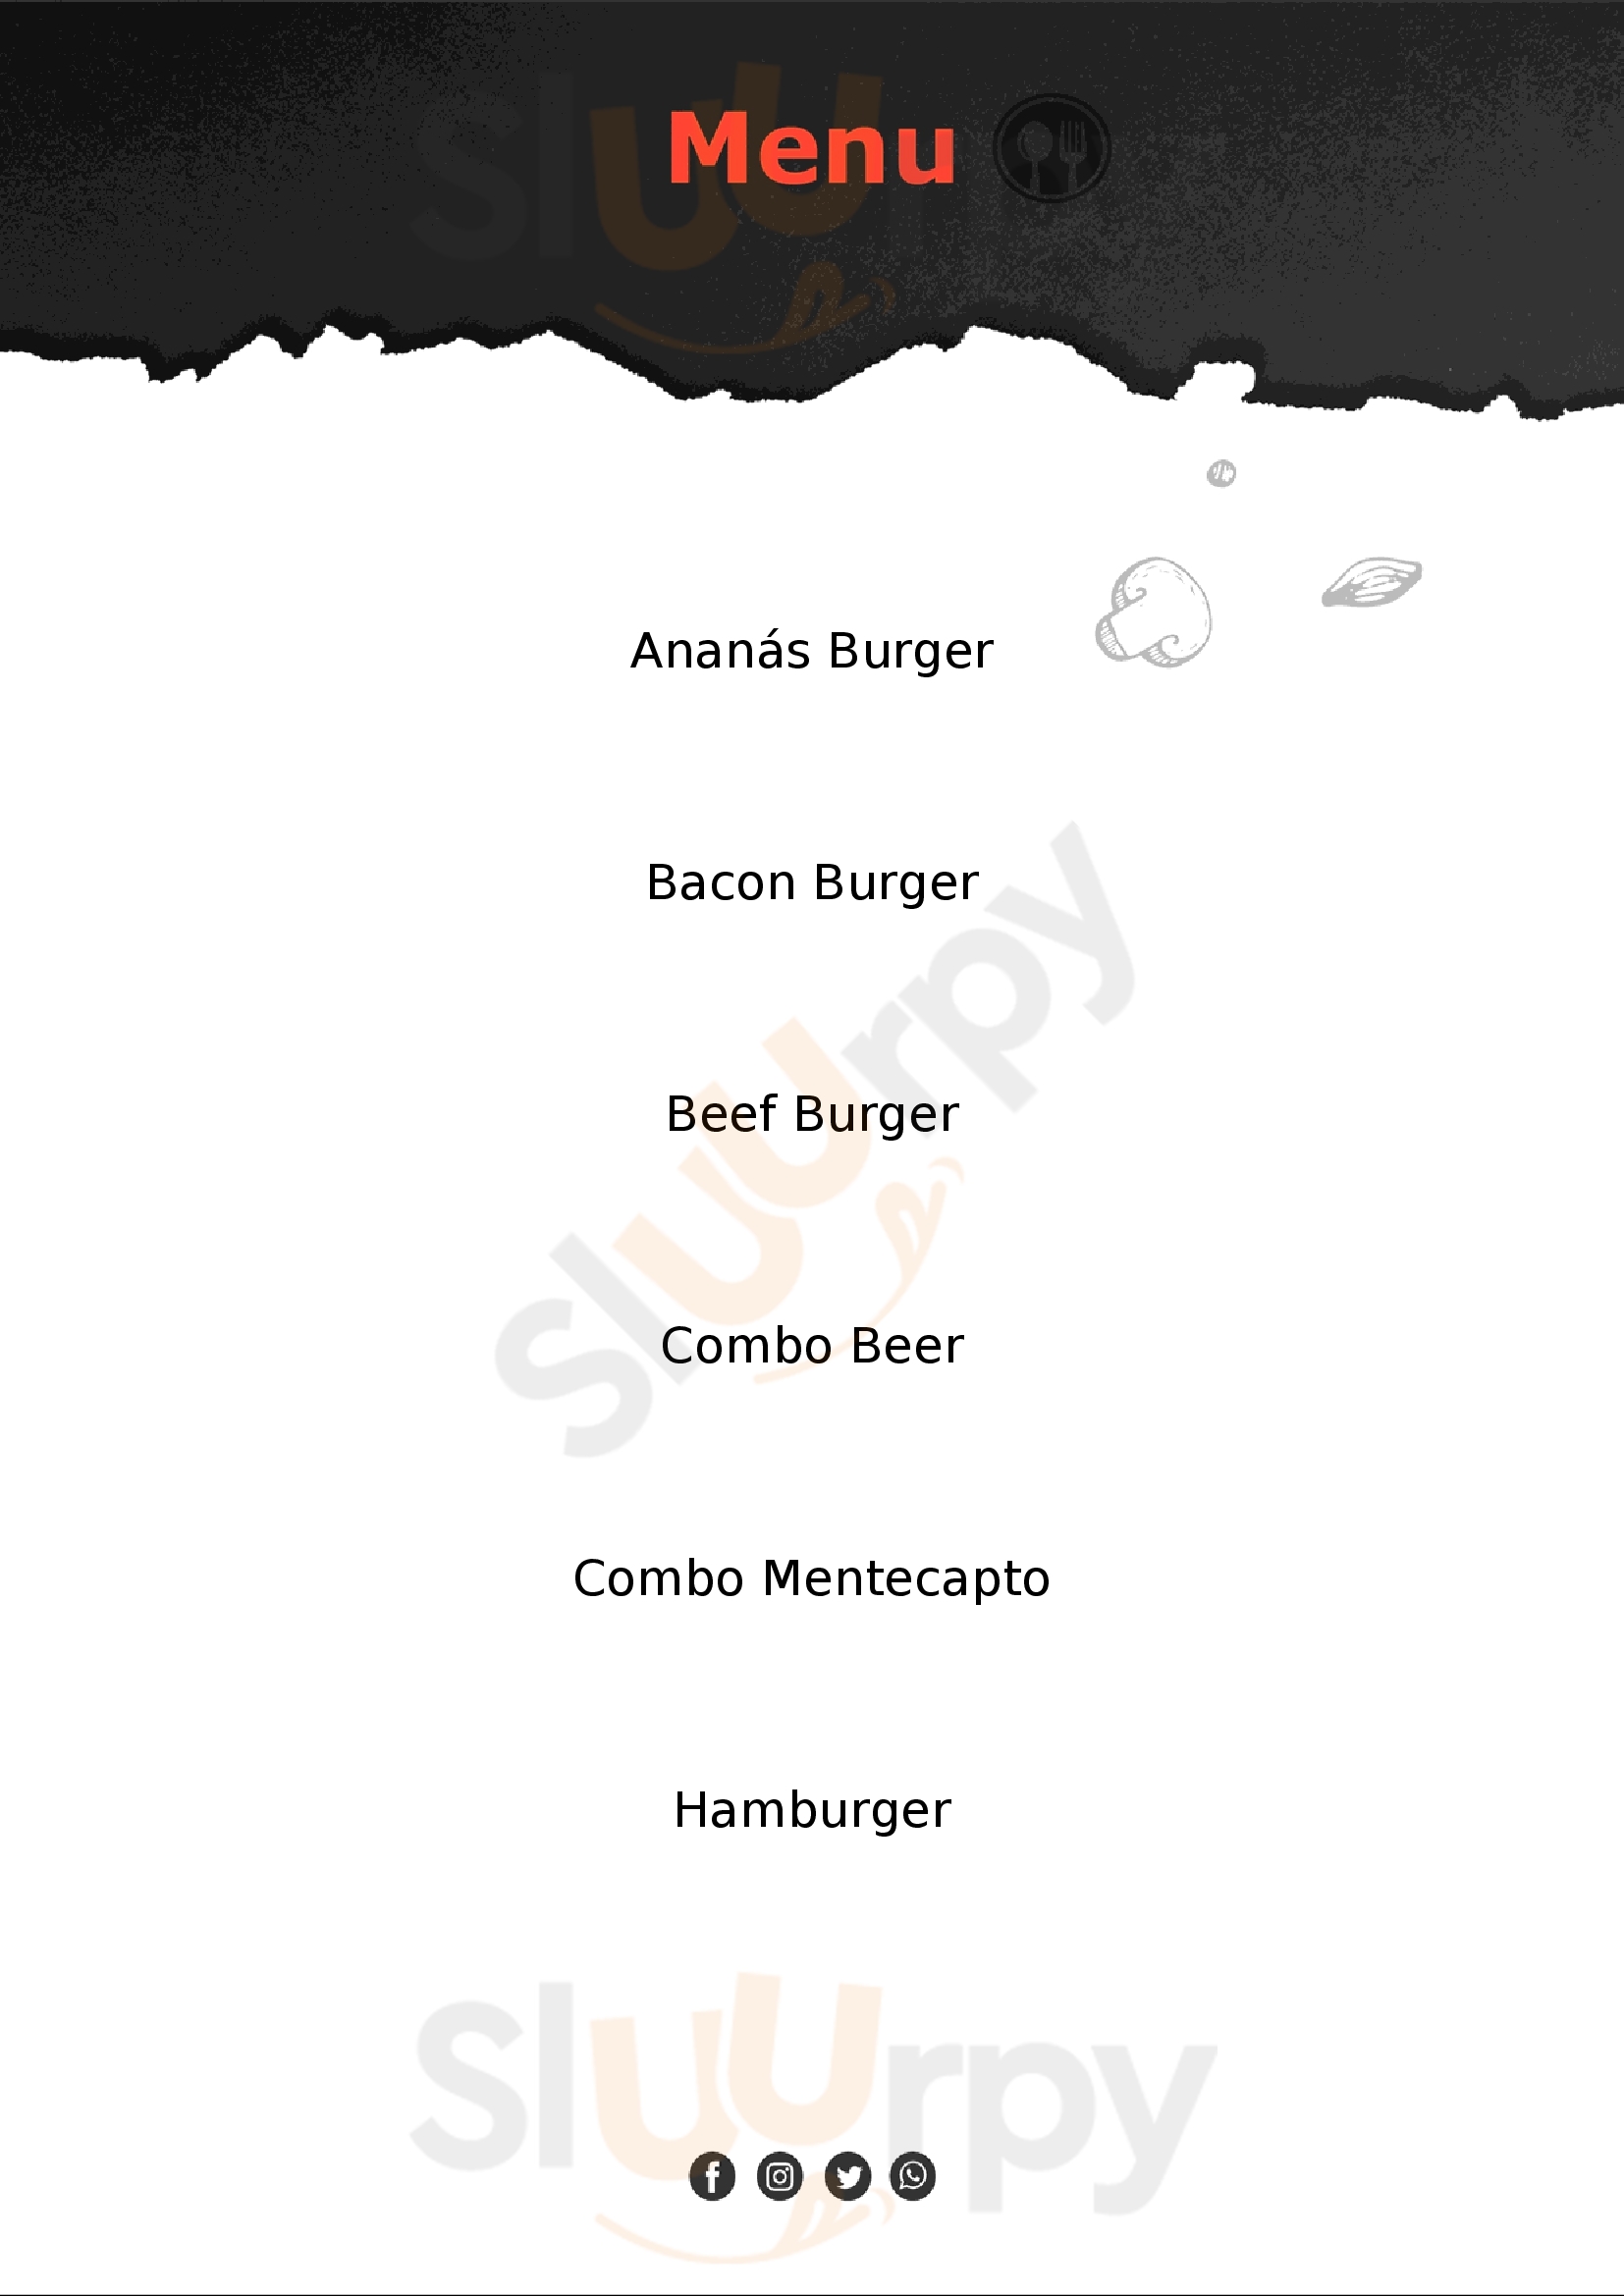 Mentecapto Burgerhouse Belo Horizonte Menu - 1